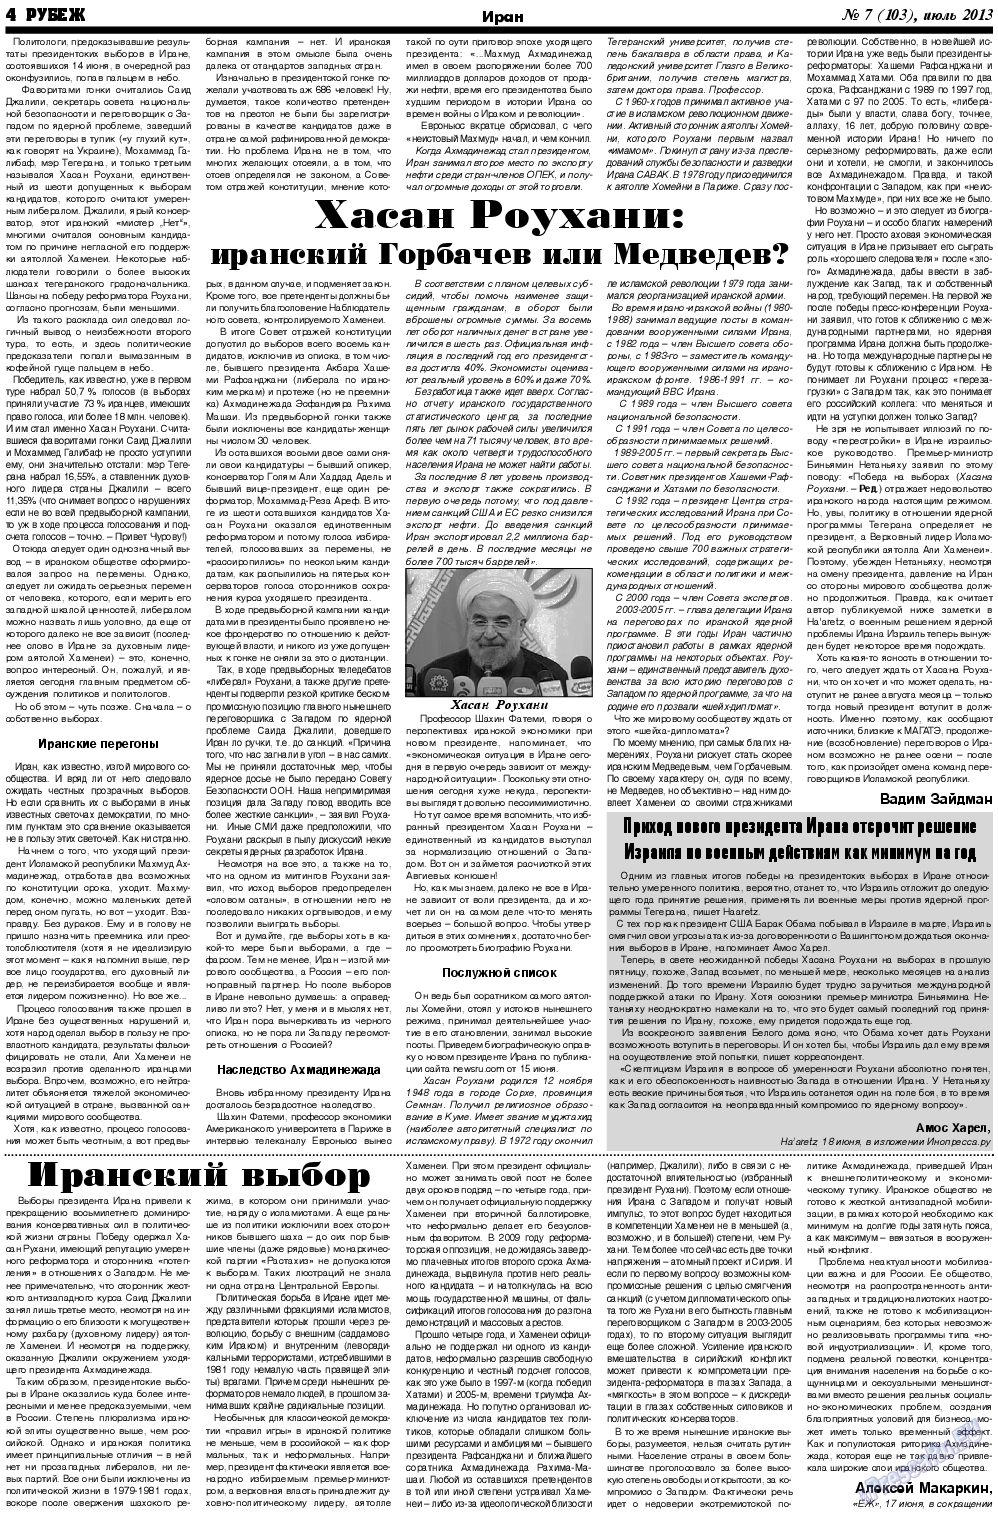 Рубеж, газета. 2013 №7 стр.4